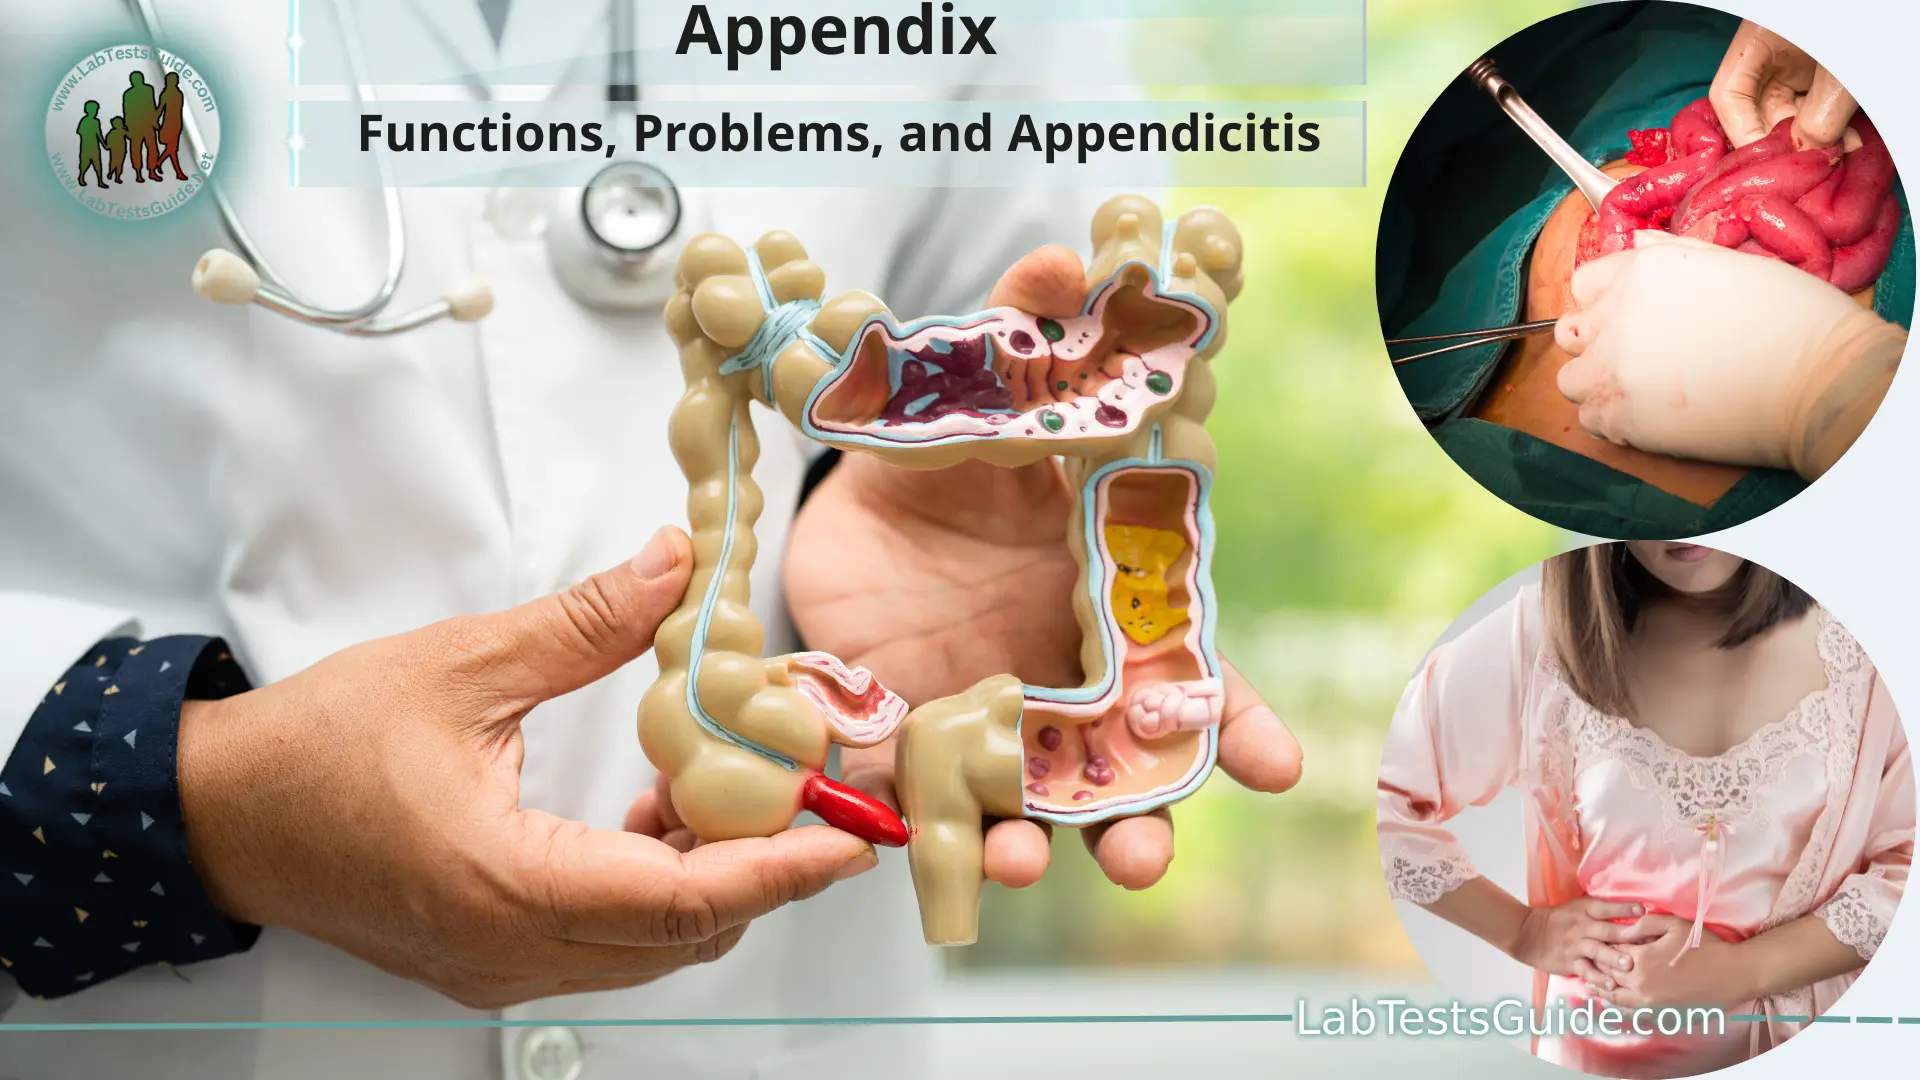 the function of vermiform appendix